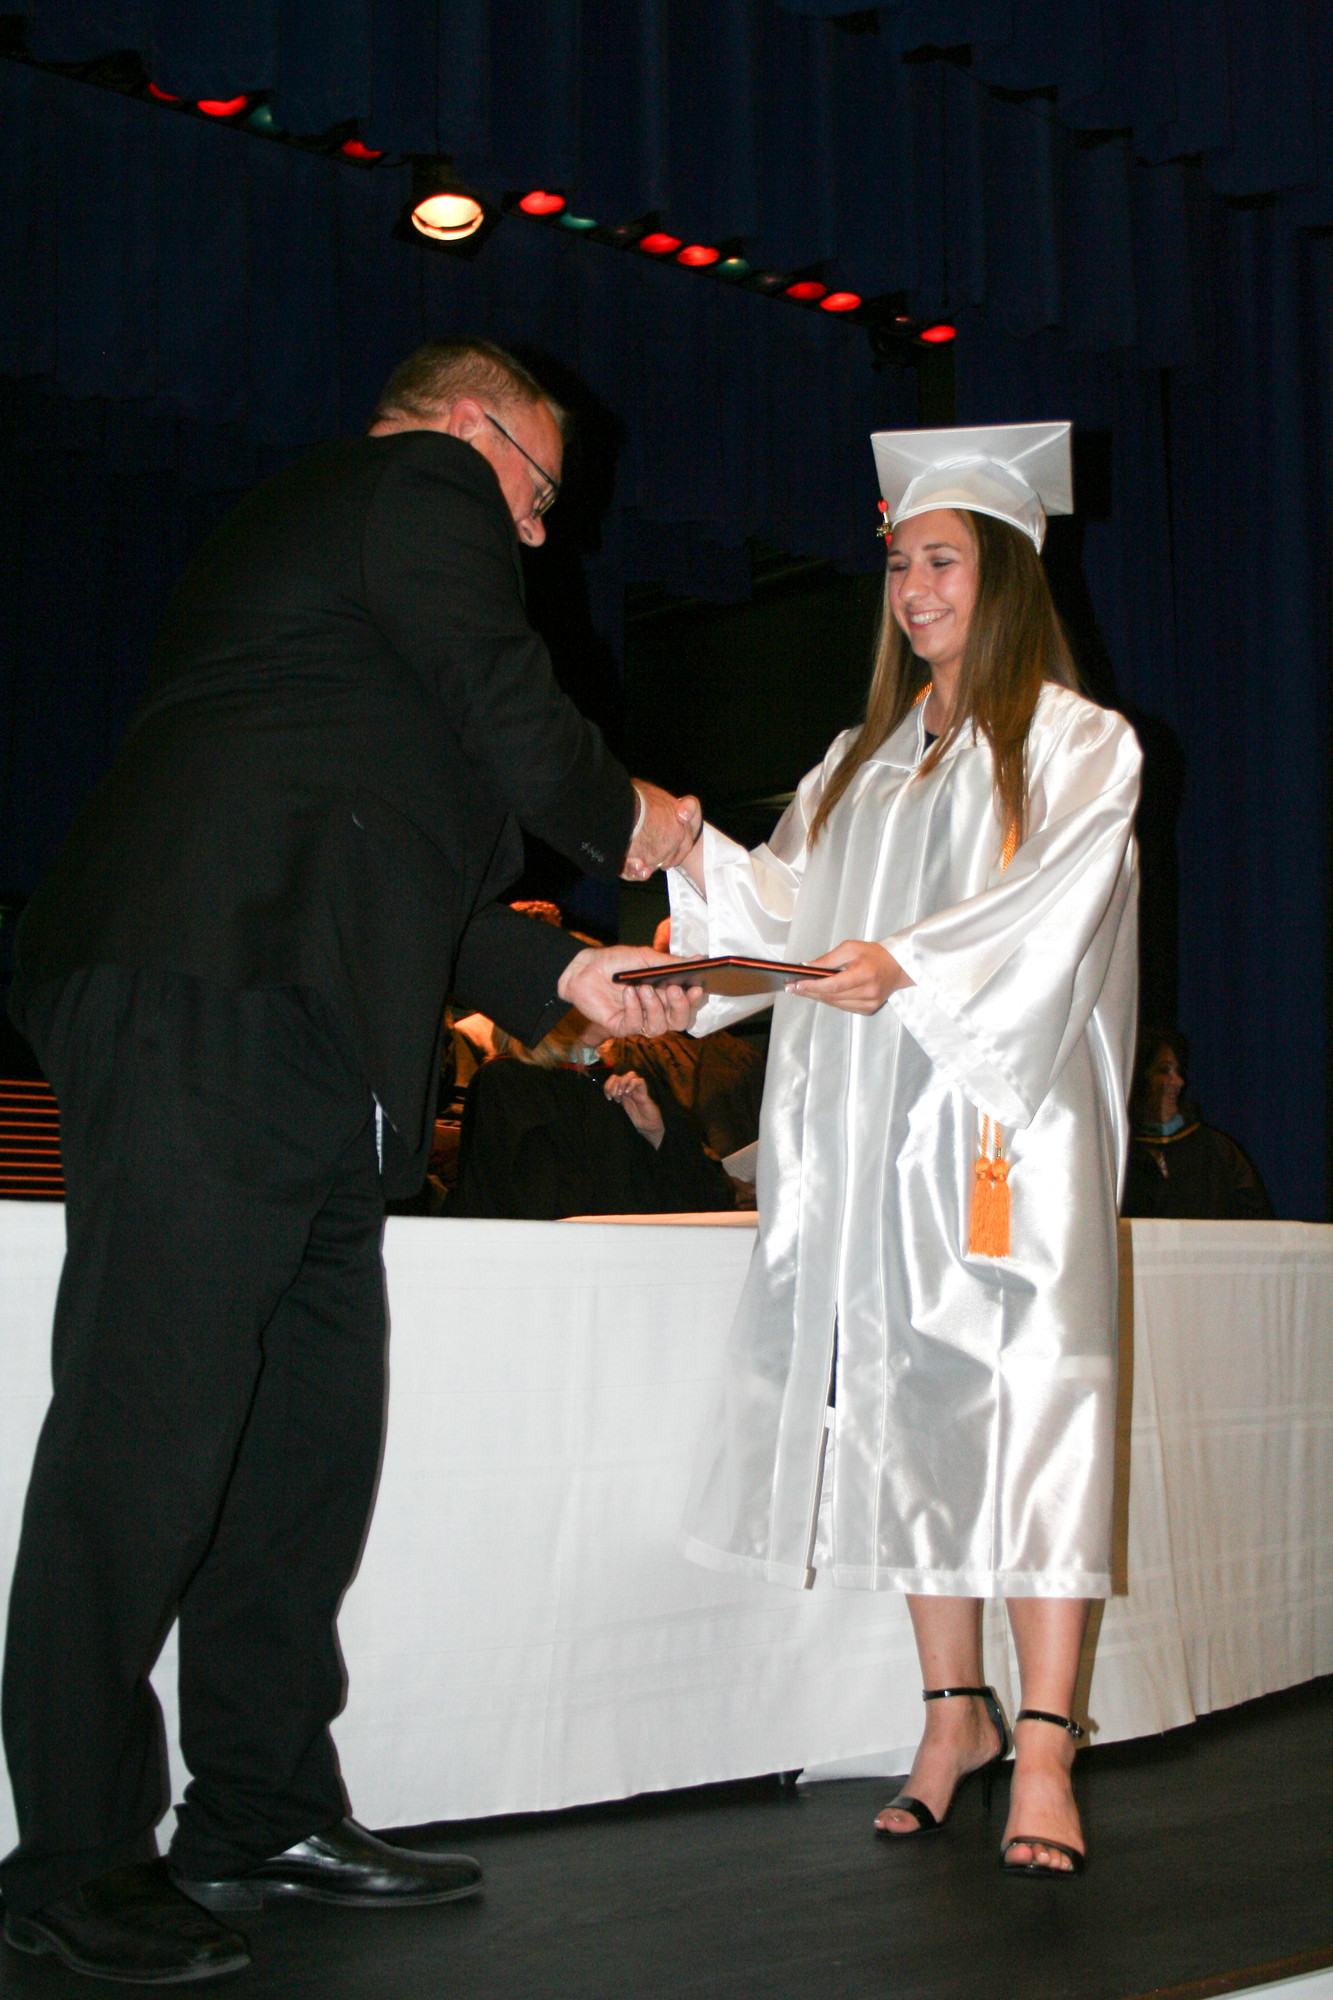 Colleen Bennett receives her diploma.